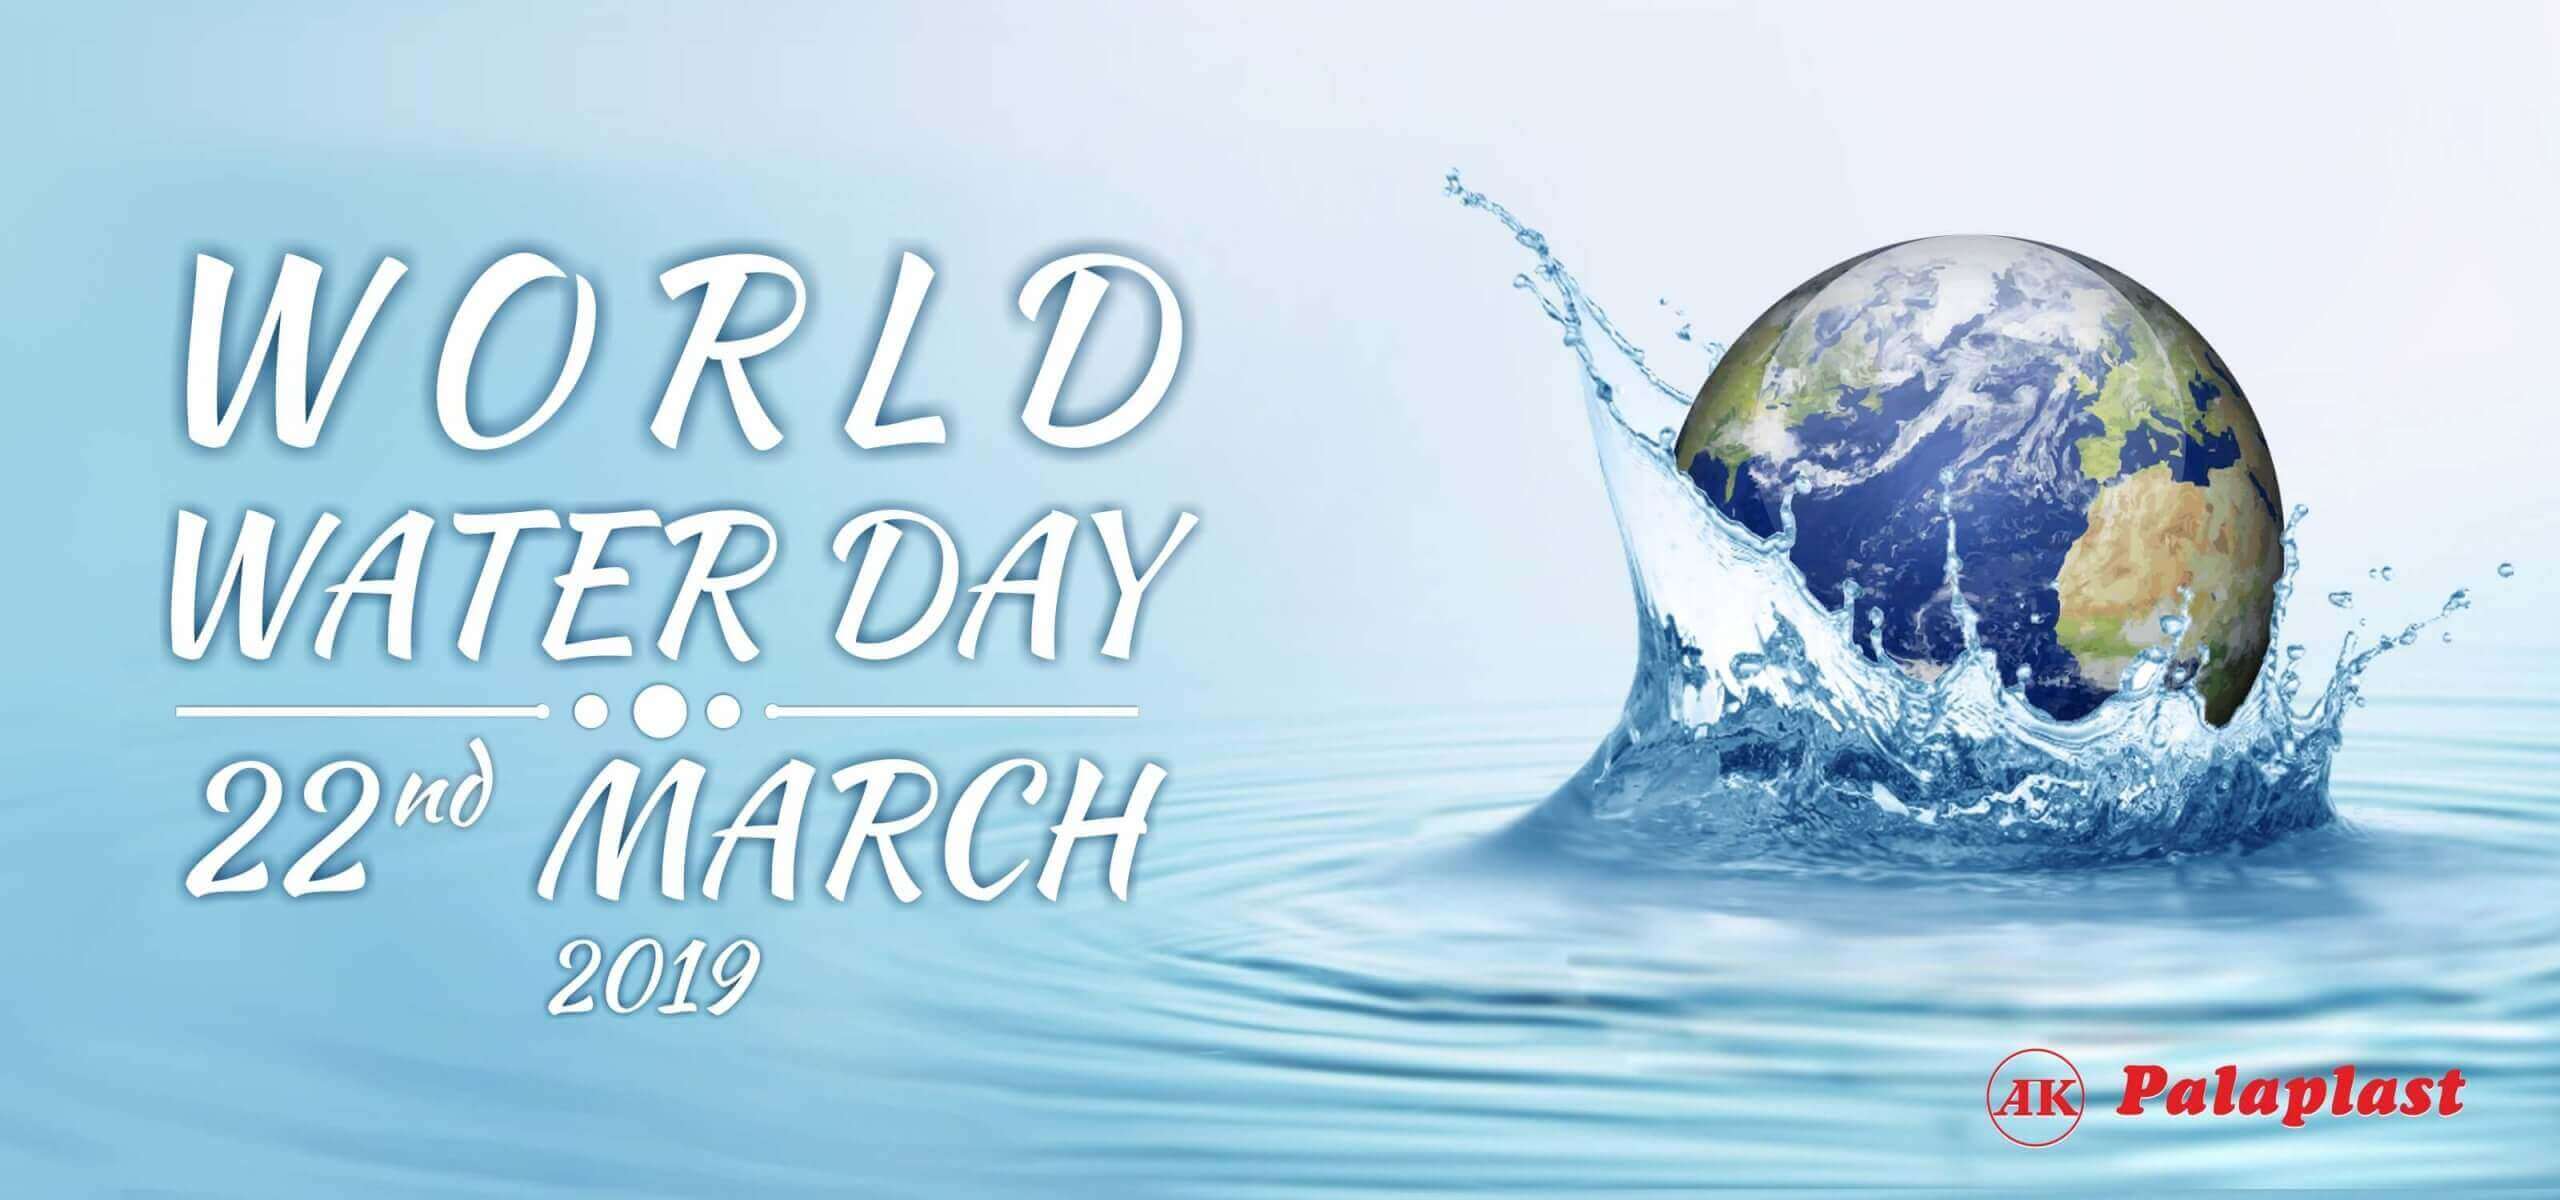 International Water Day